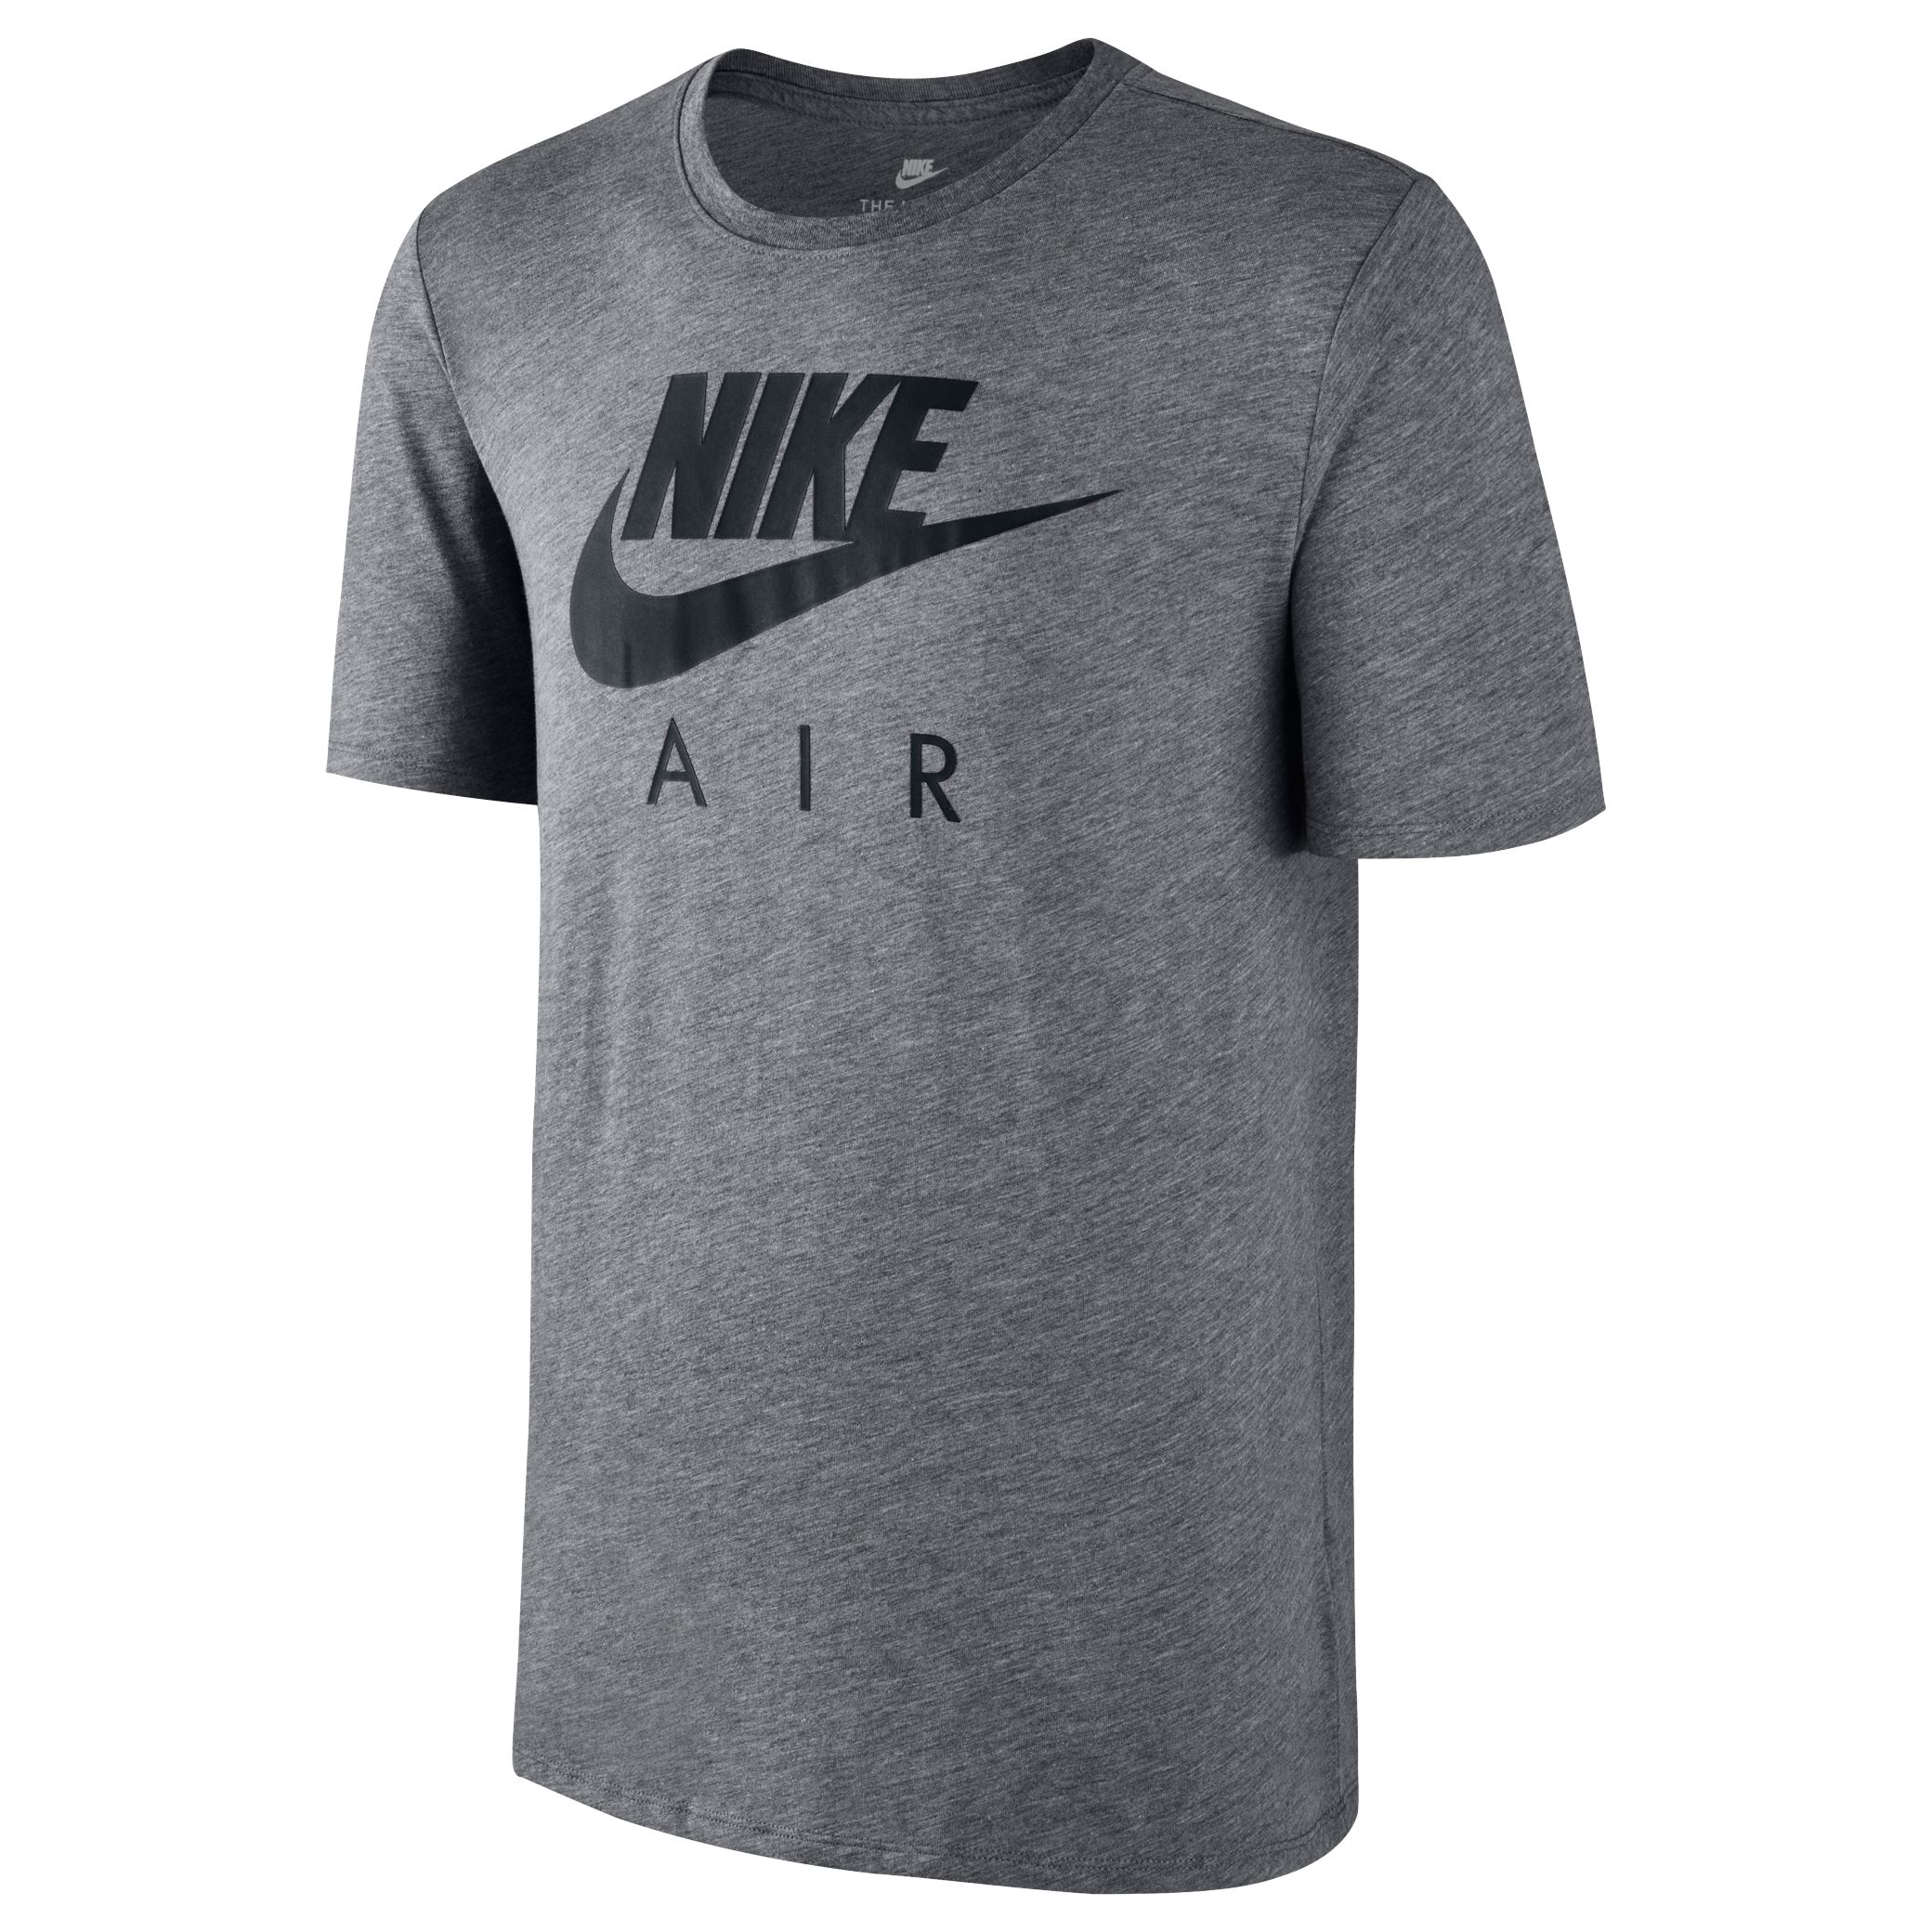 Nike Sportswear Air T-Shirt, Carbon Heather/Black, XL